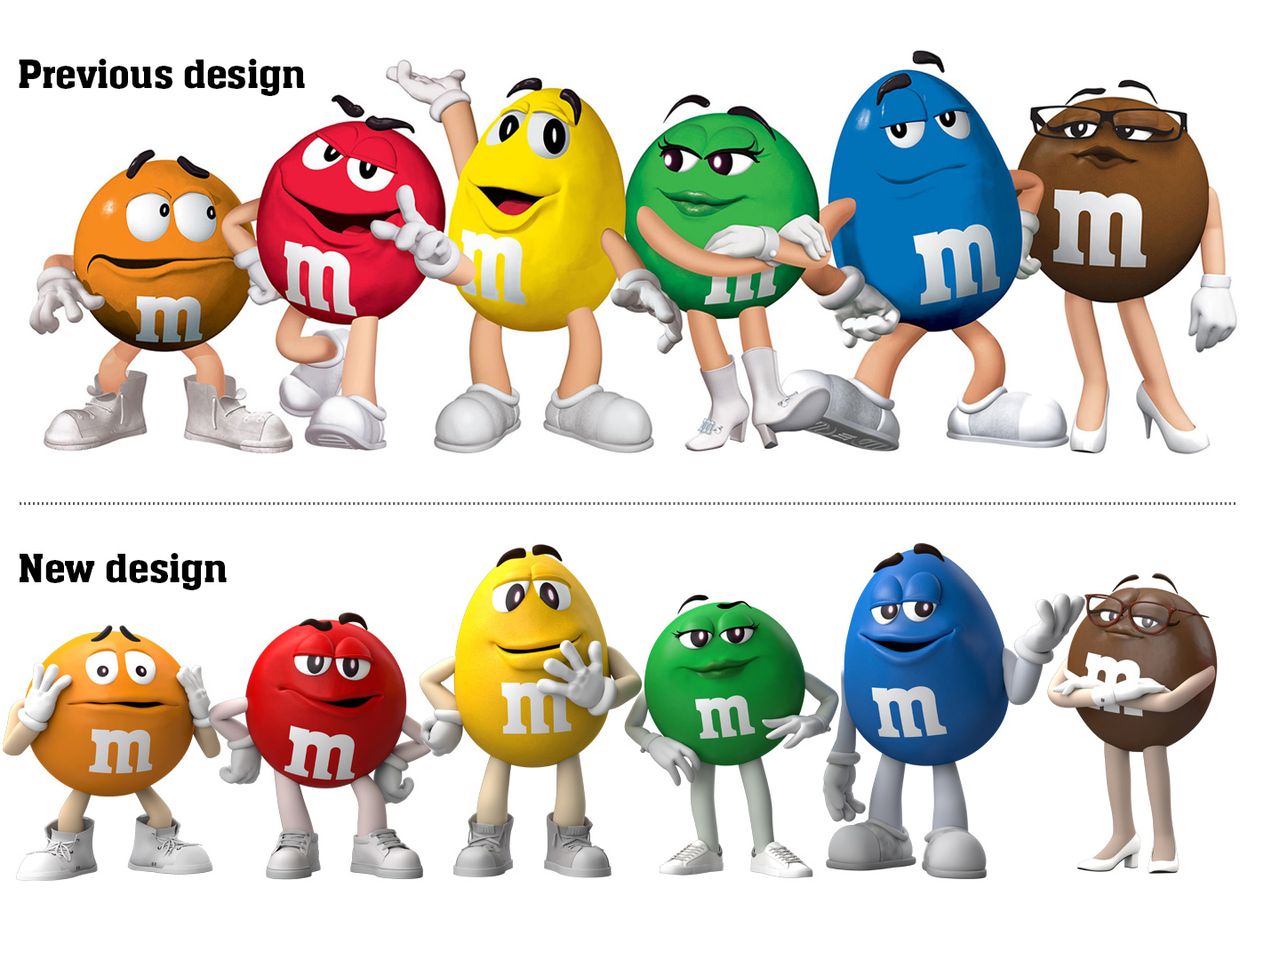 Dumbest Controversies and Conspiracies - m&m mascots - Previous design New design m Cc m 20 m m m Up m m